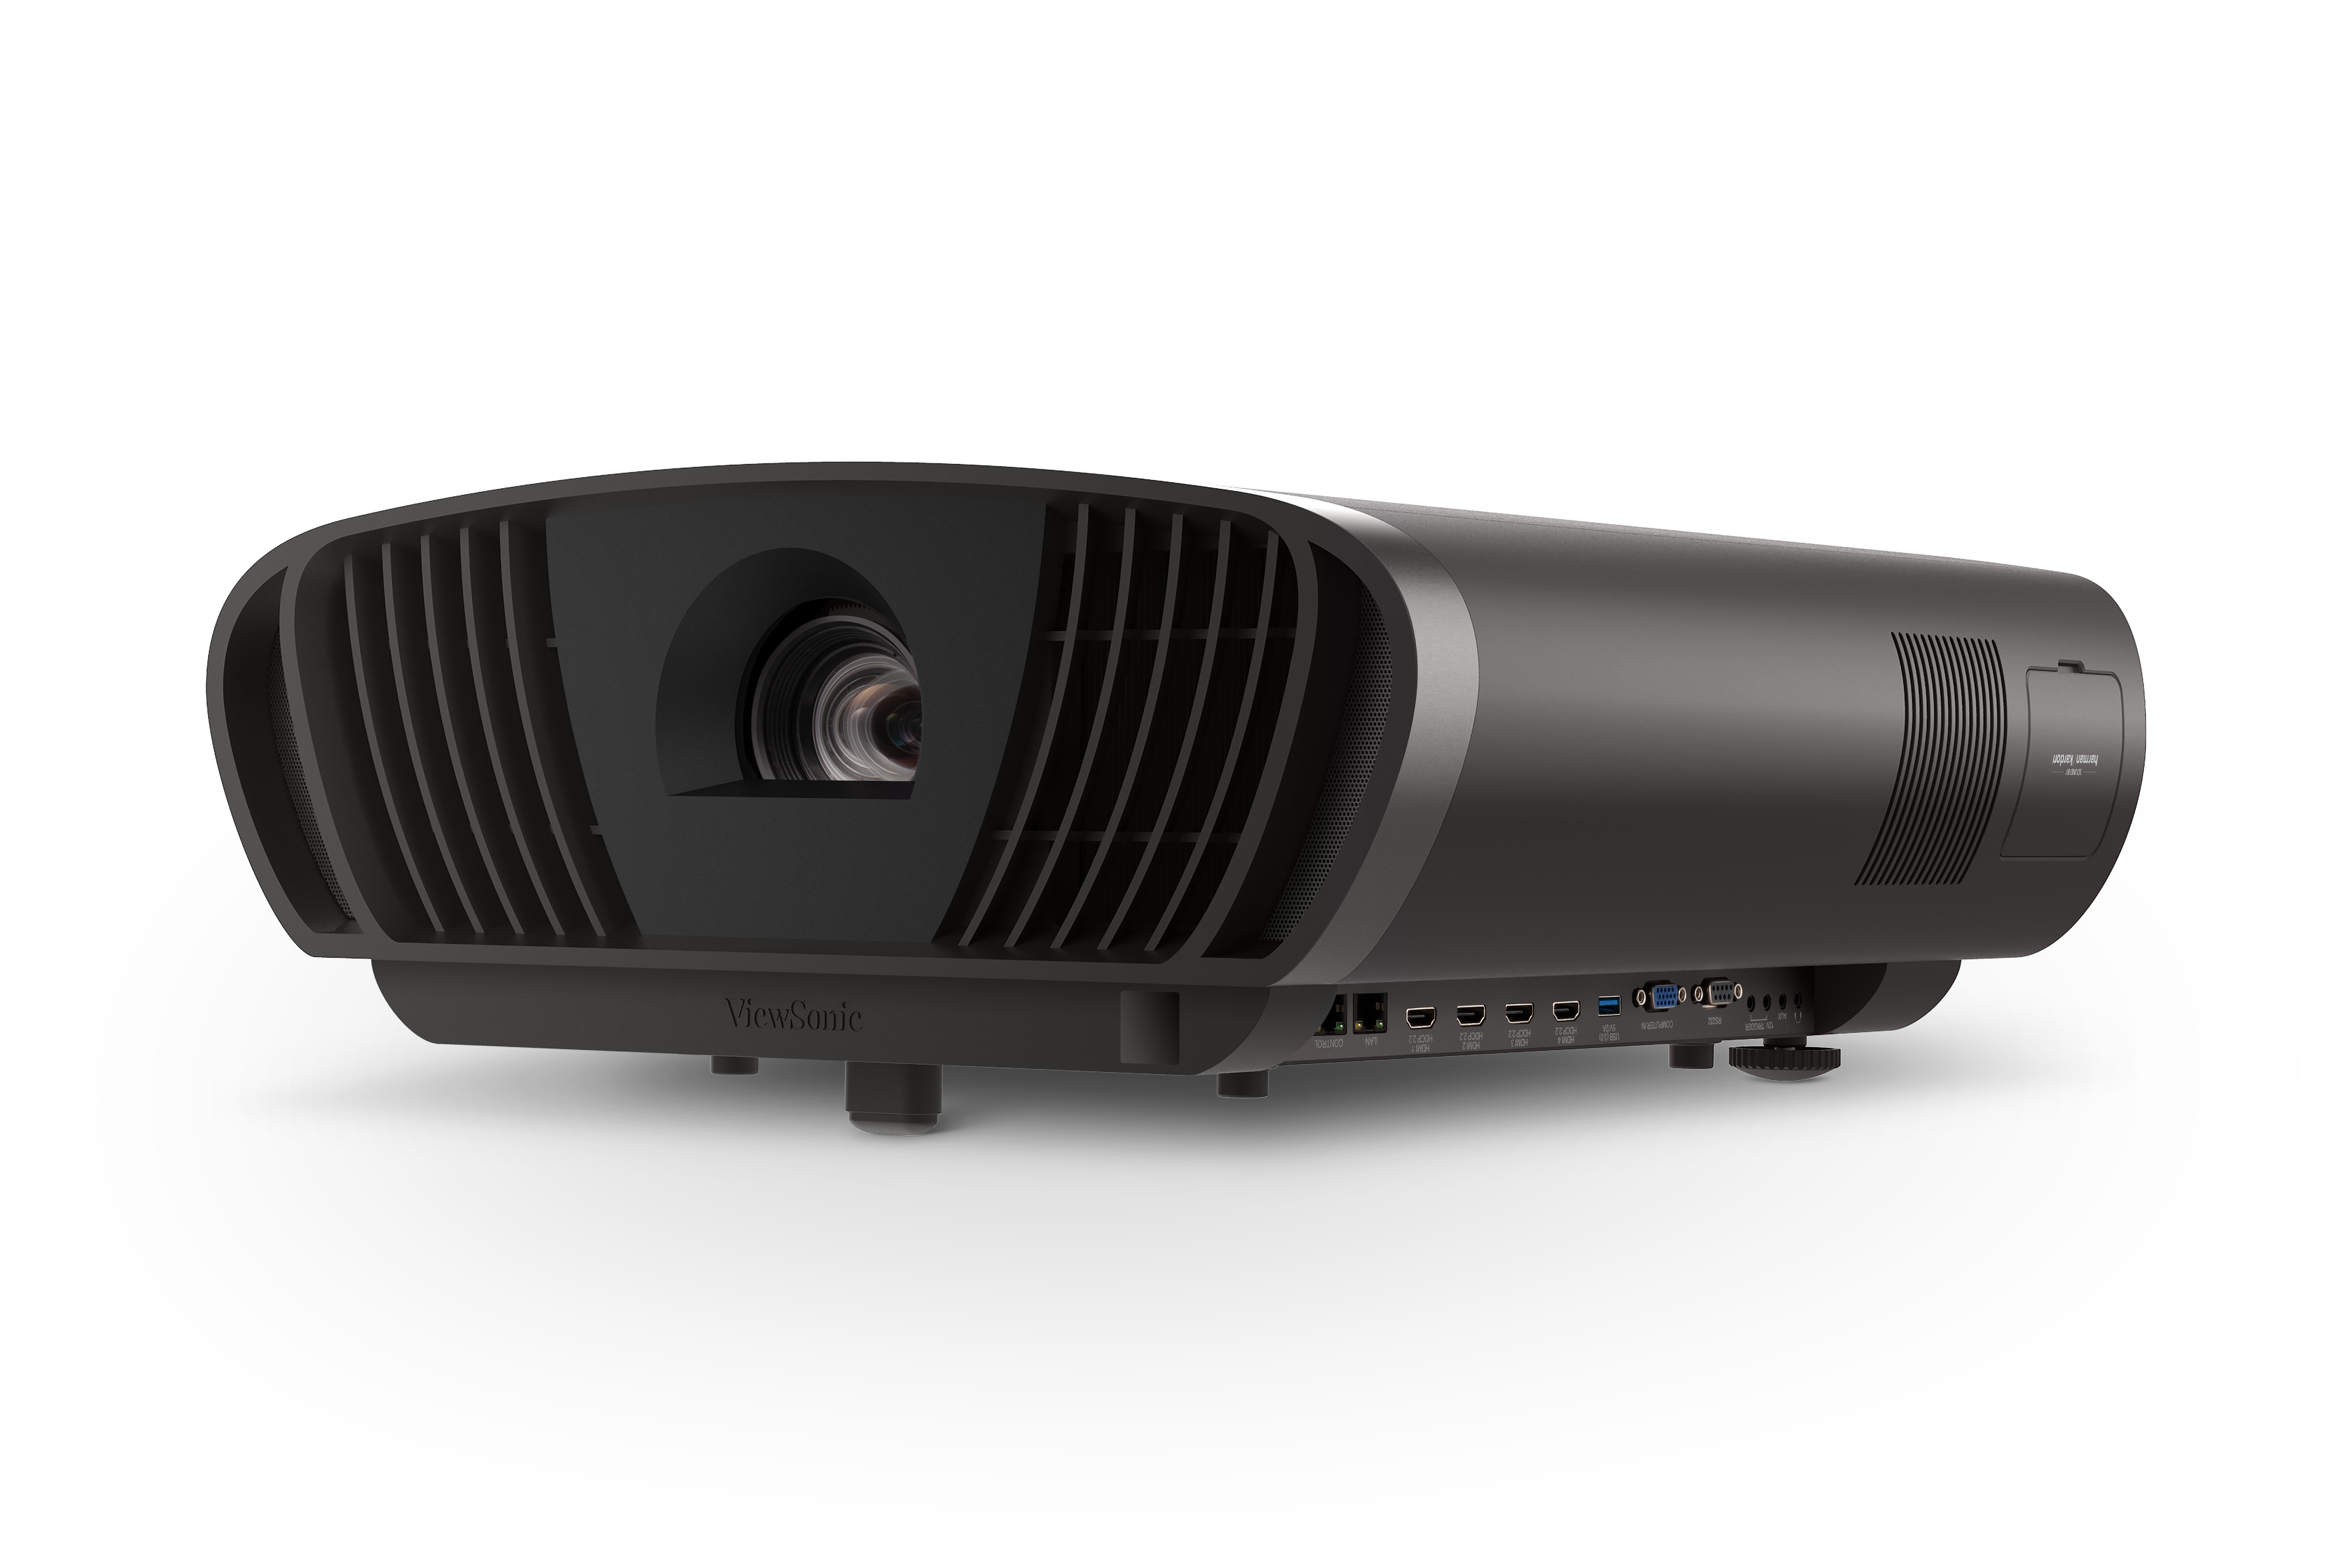 Viewsonic X100-4K - Vidéoprojecteur 4K UHD 1900 Lumens LED 16:9 (X100-4K)